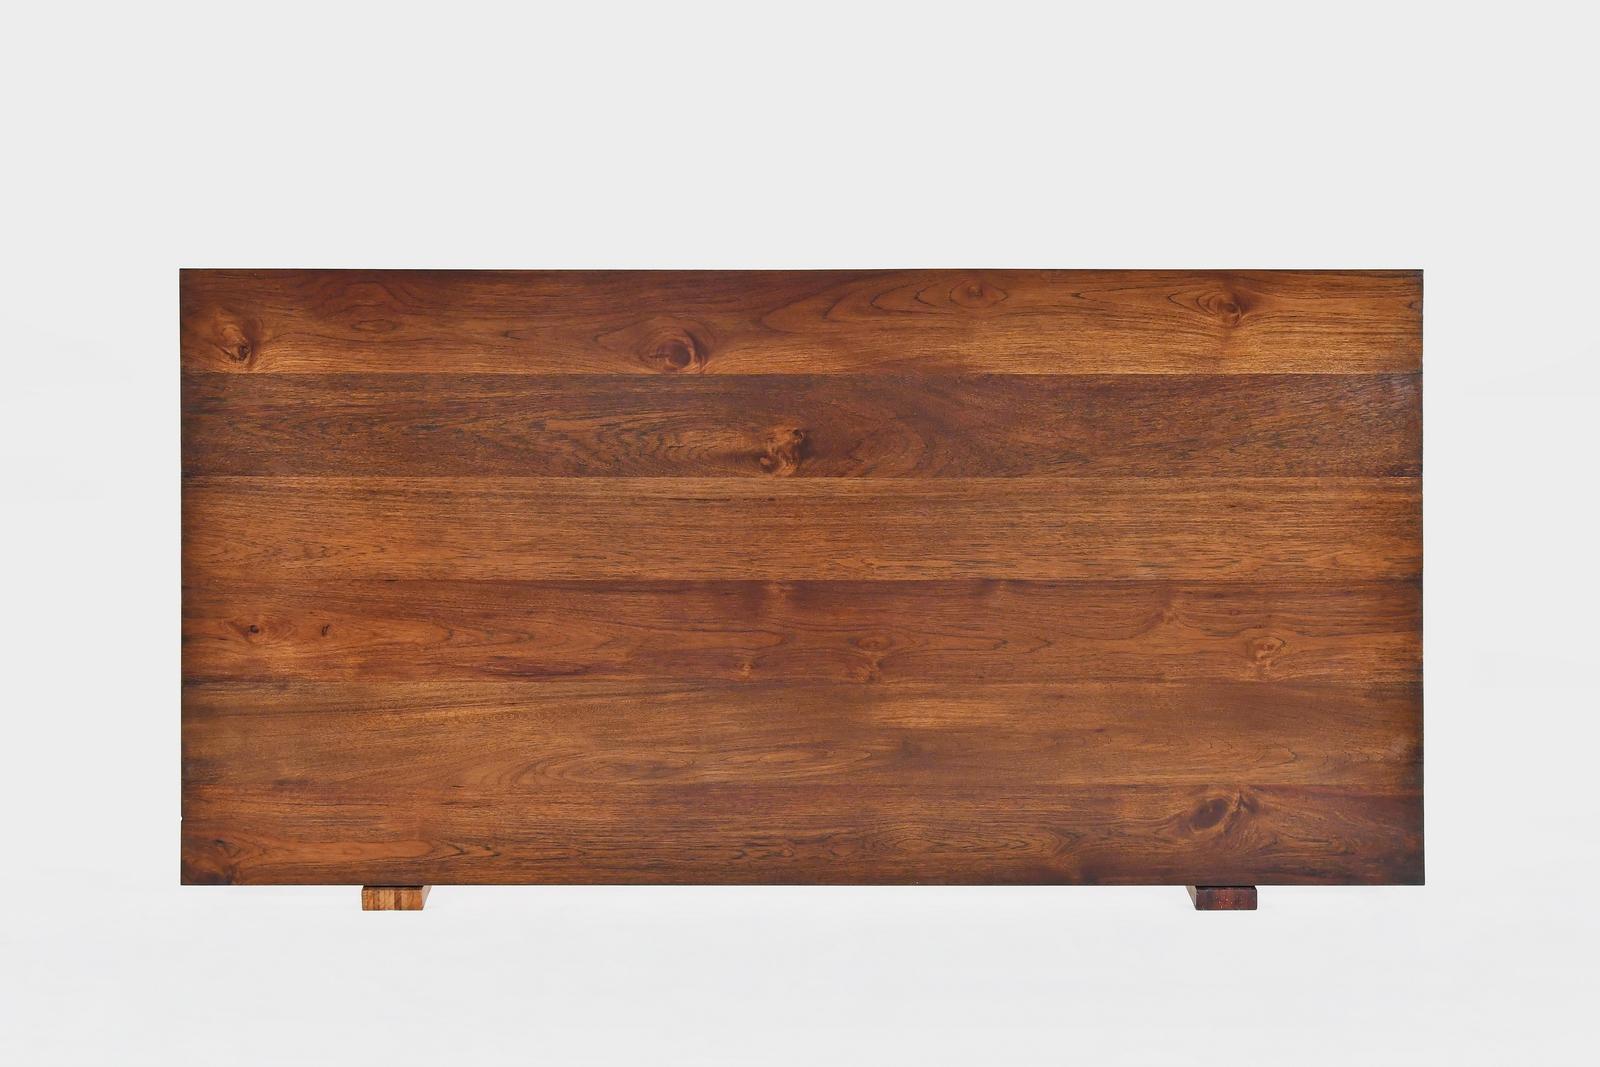 Bespoke Table, Reclaimed Teak wood, Sand cast Aluminum Bases by P. Tendercool For Sale 7